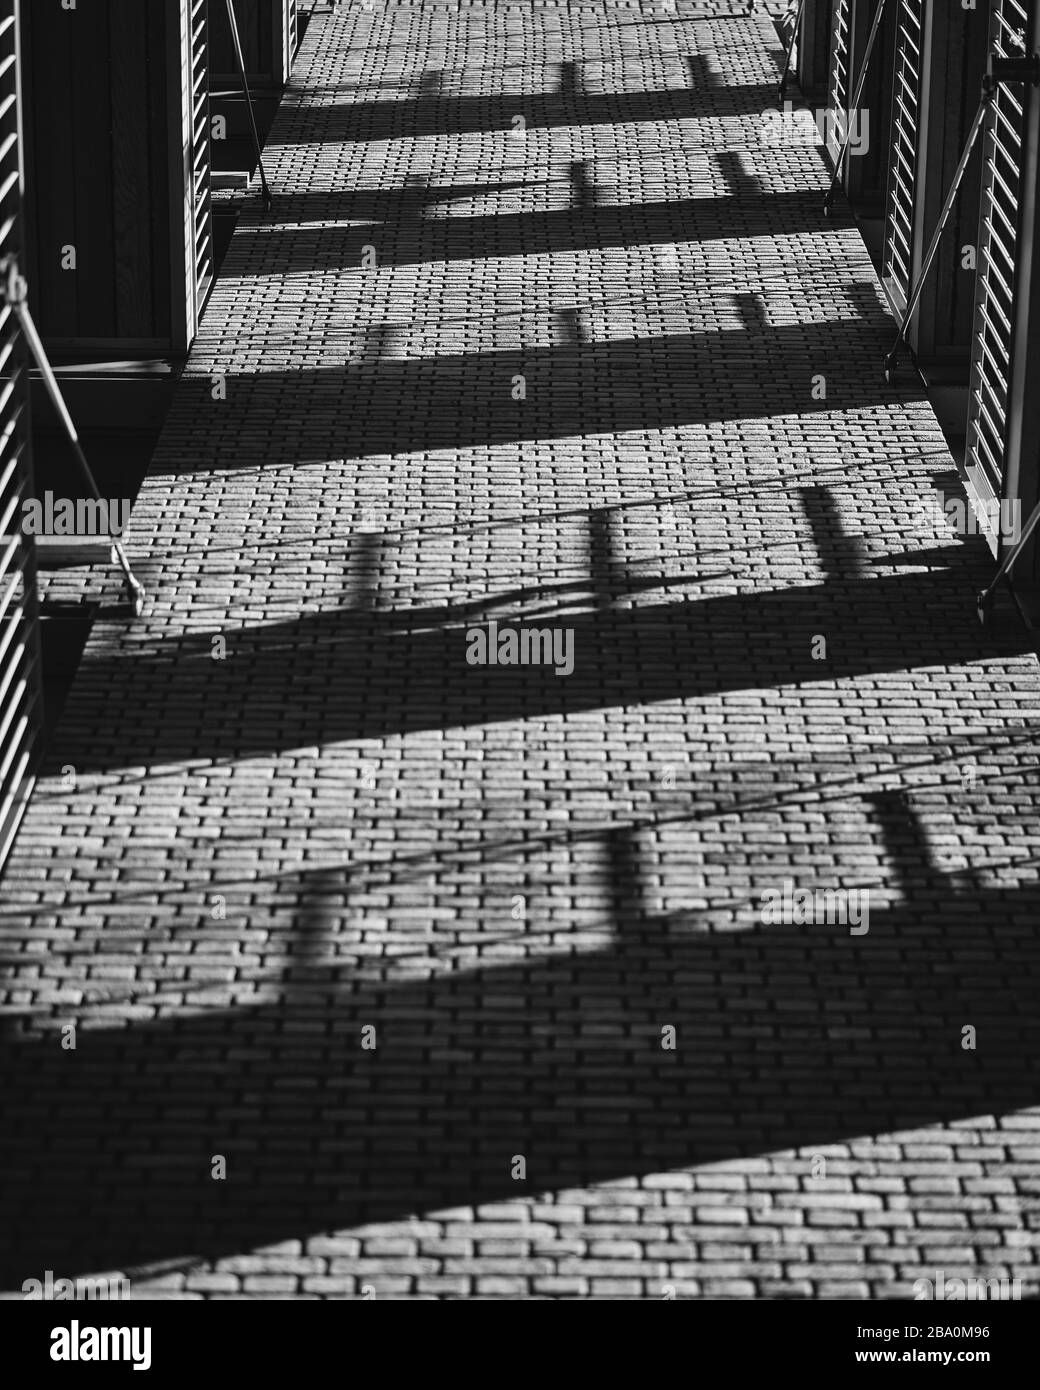 Balconies shadows cast on a brick wall Stock Photo